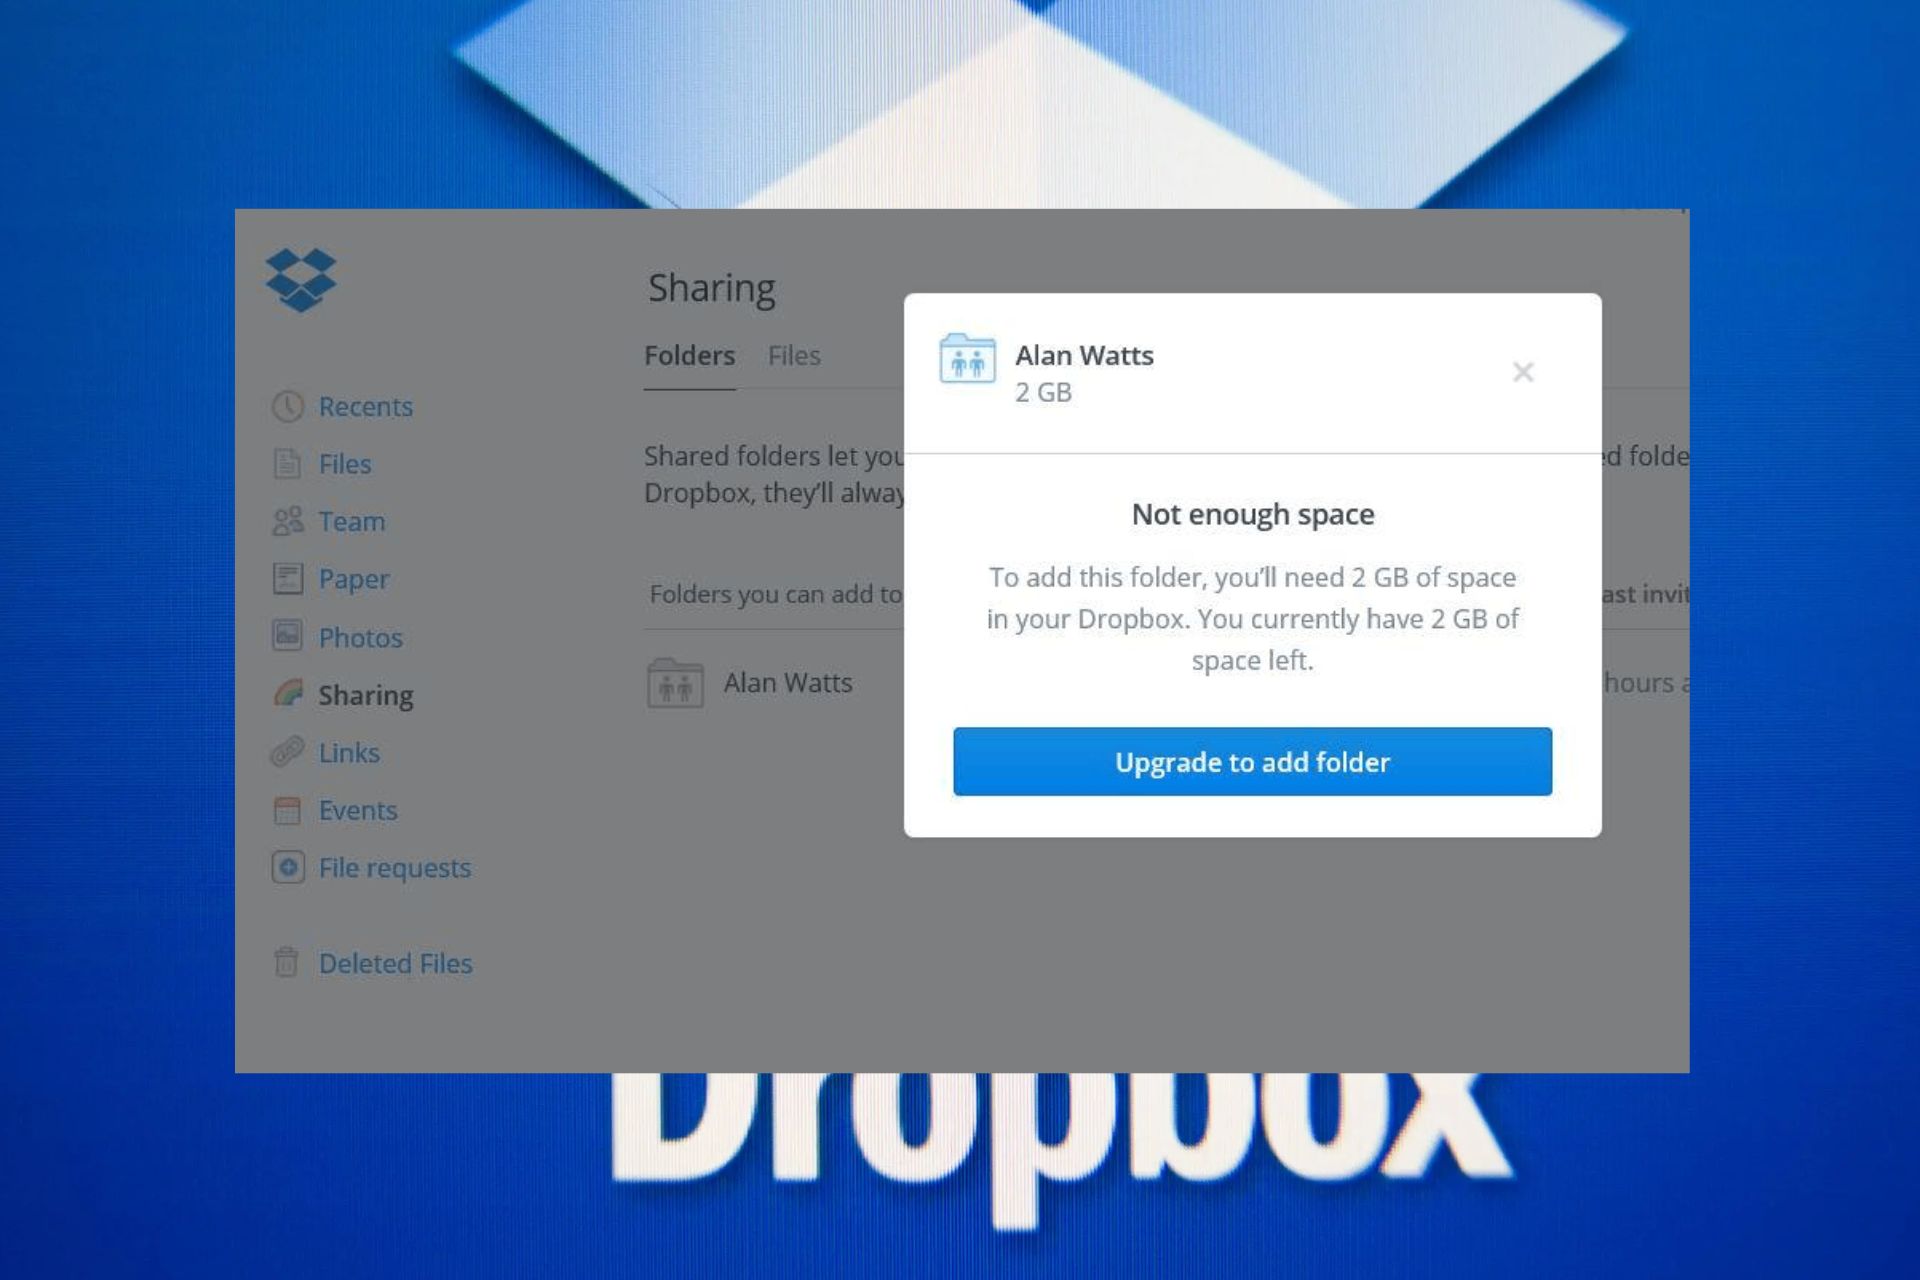 Fix: Dropbox Not Enough Space to Access Folder